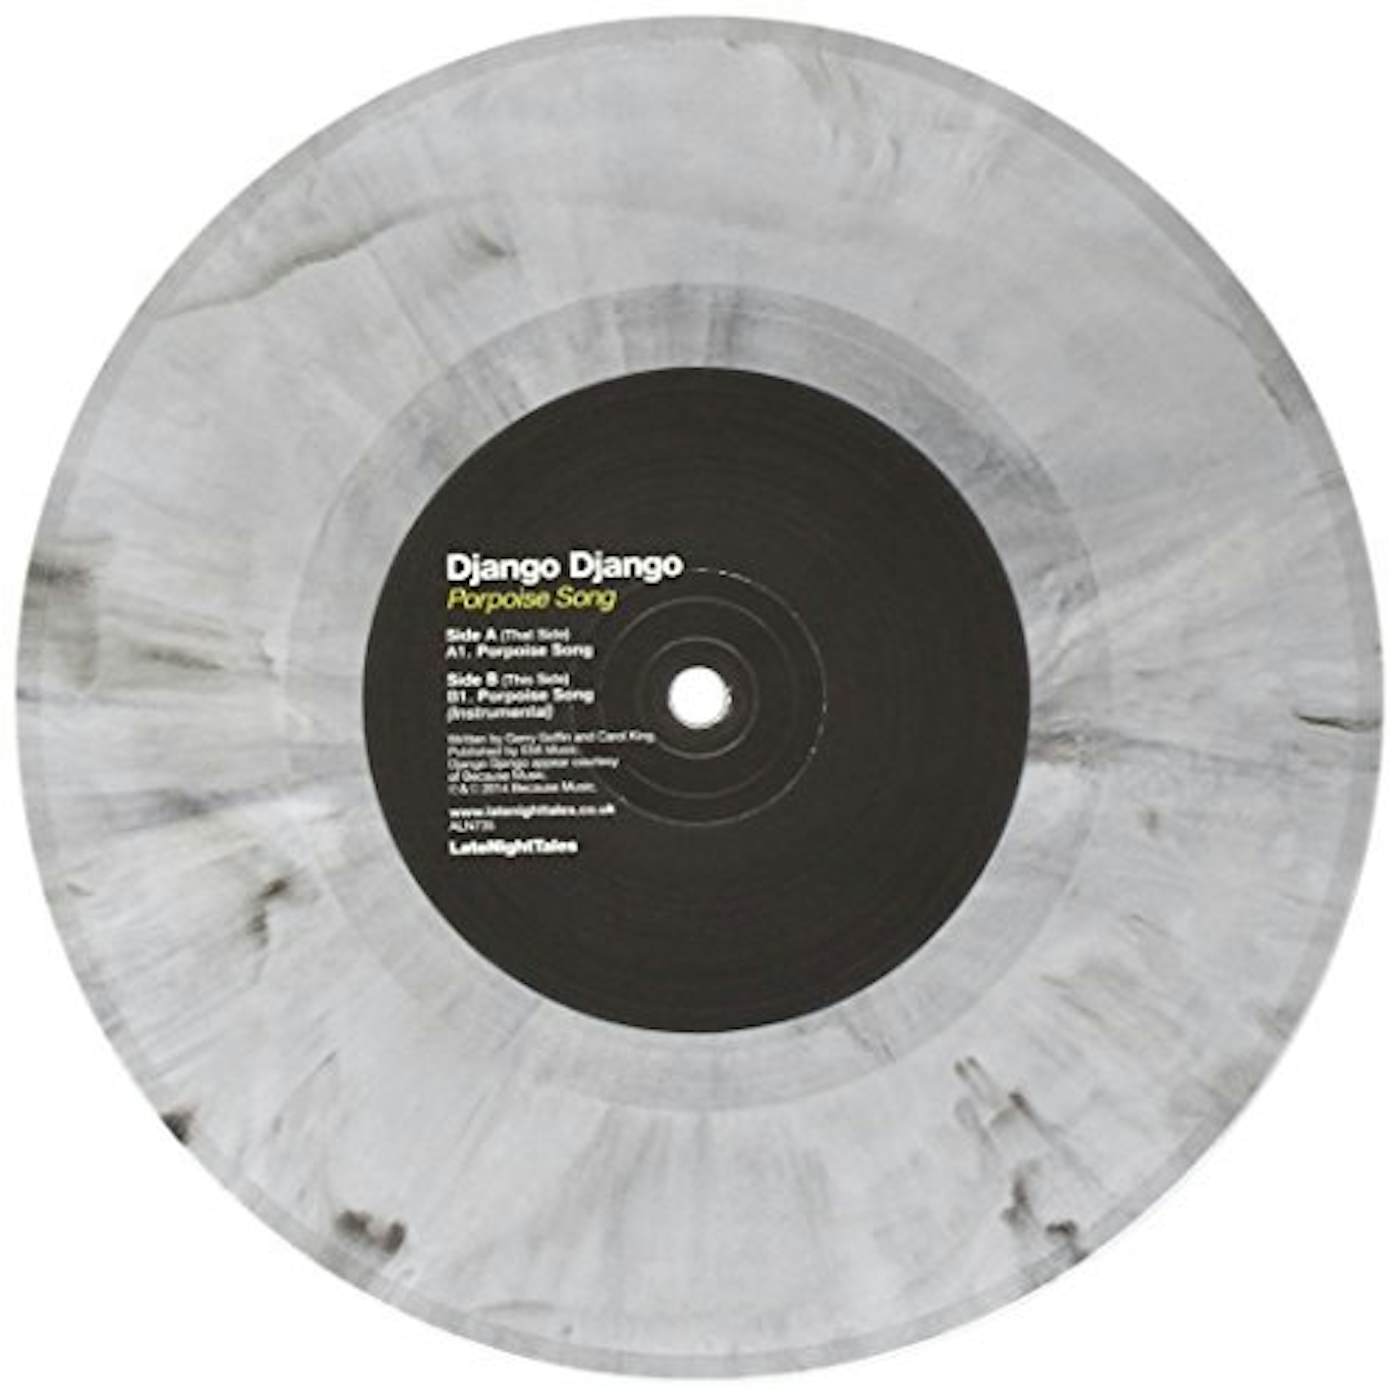 Django Django PORPOISE SONG Vinyl Record - Colored Vinyl